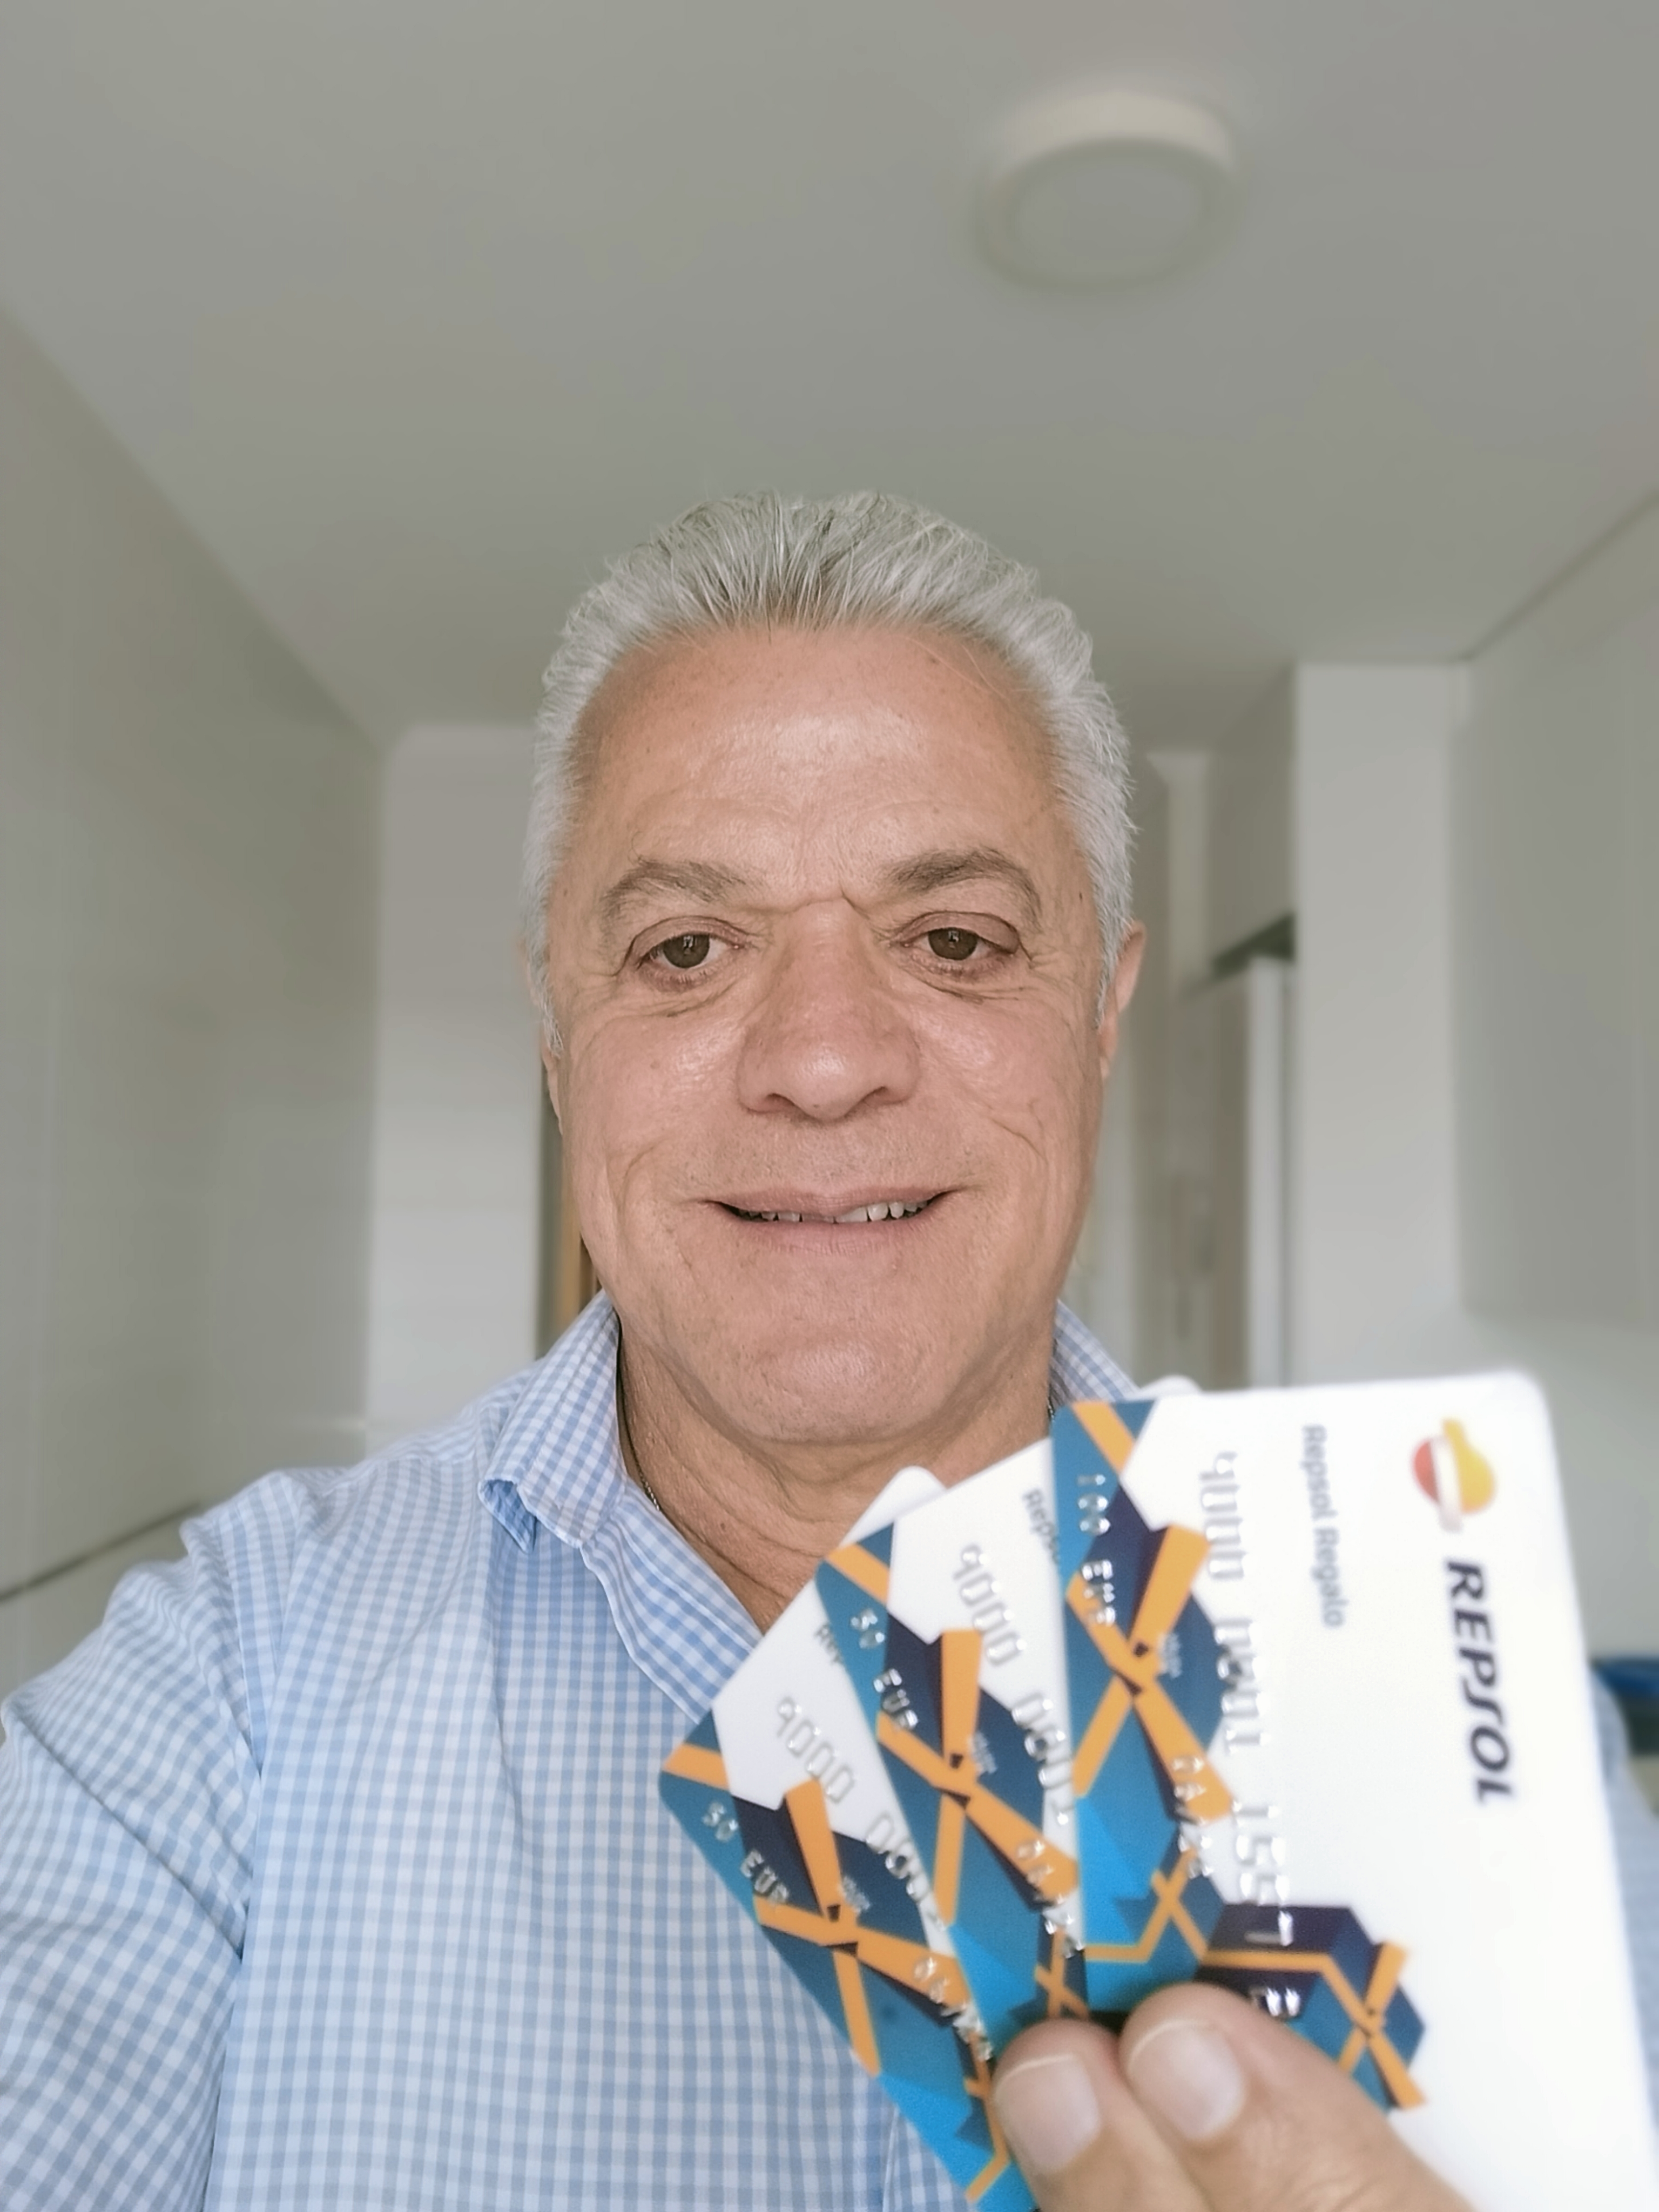 Jose Ramón – OVIEDO (Asturias) Ganador de una tarjeta regalo de 200€